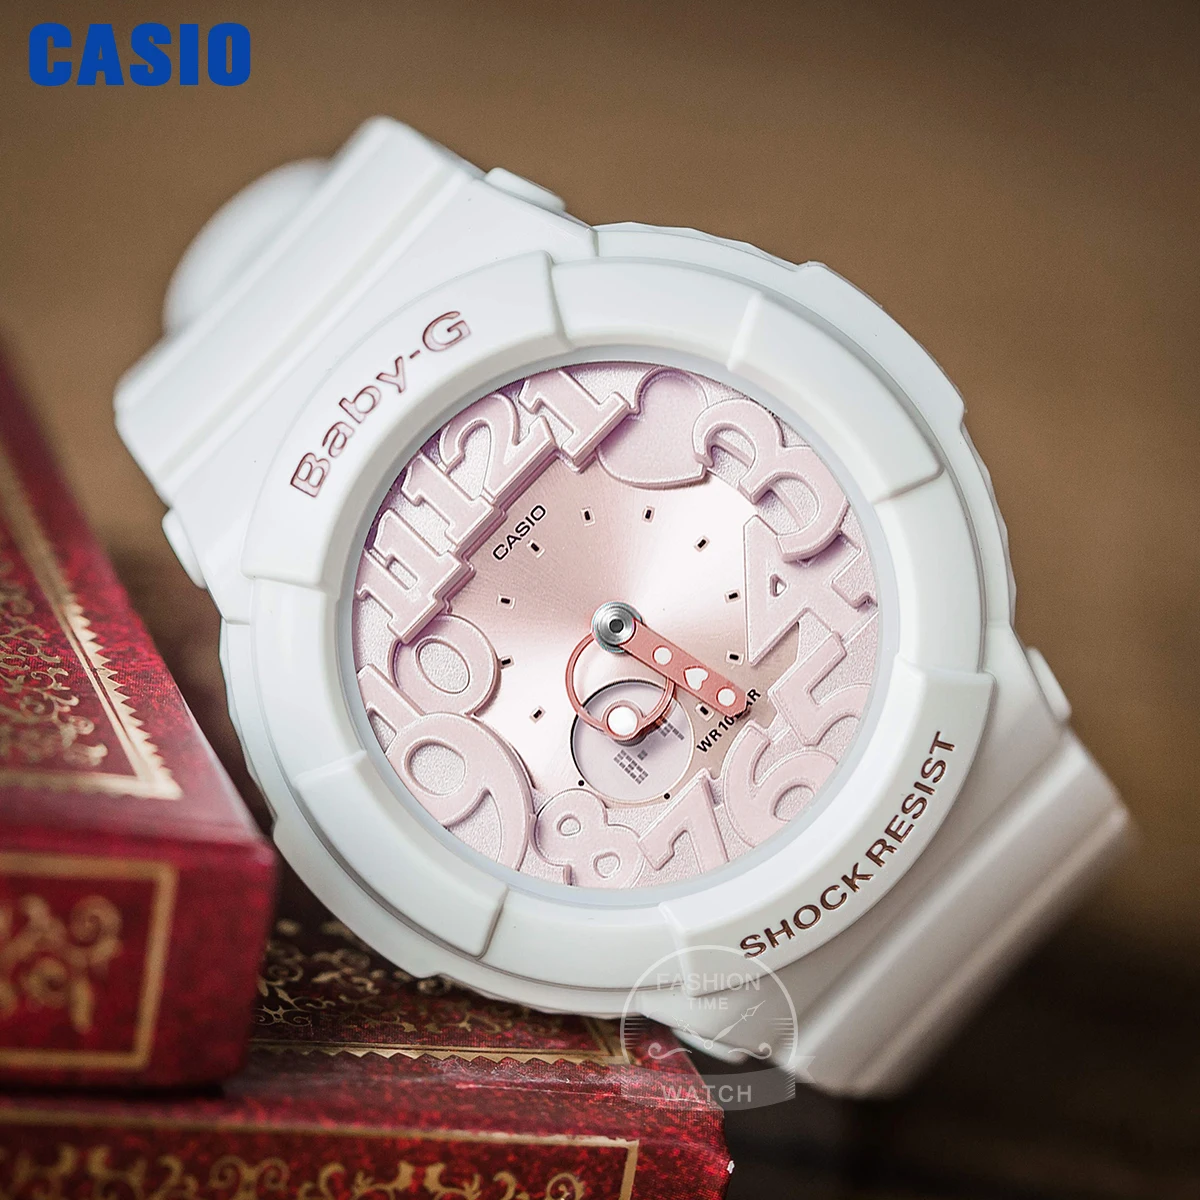 

Casio watch g shock women top brand luxury Waterproof LED digital Display sport watch quartz wrist watch reloj relogio BGA-131